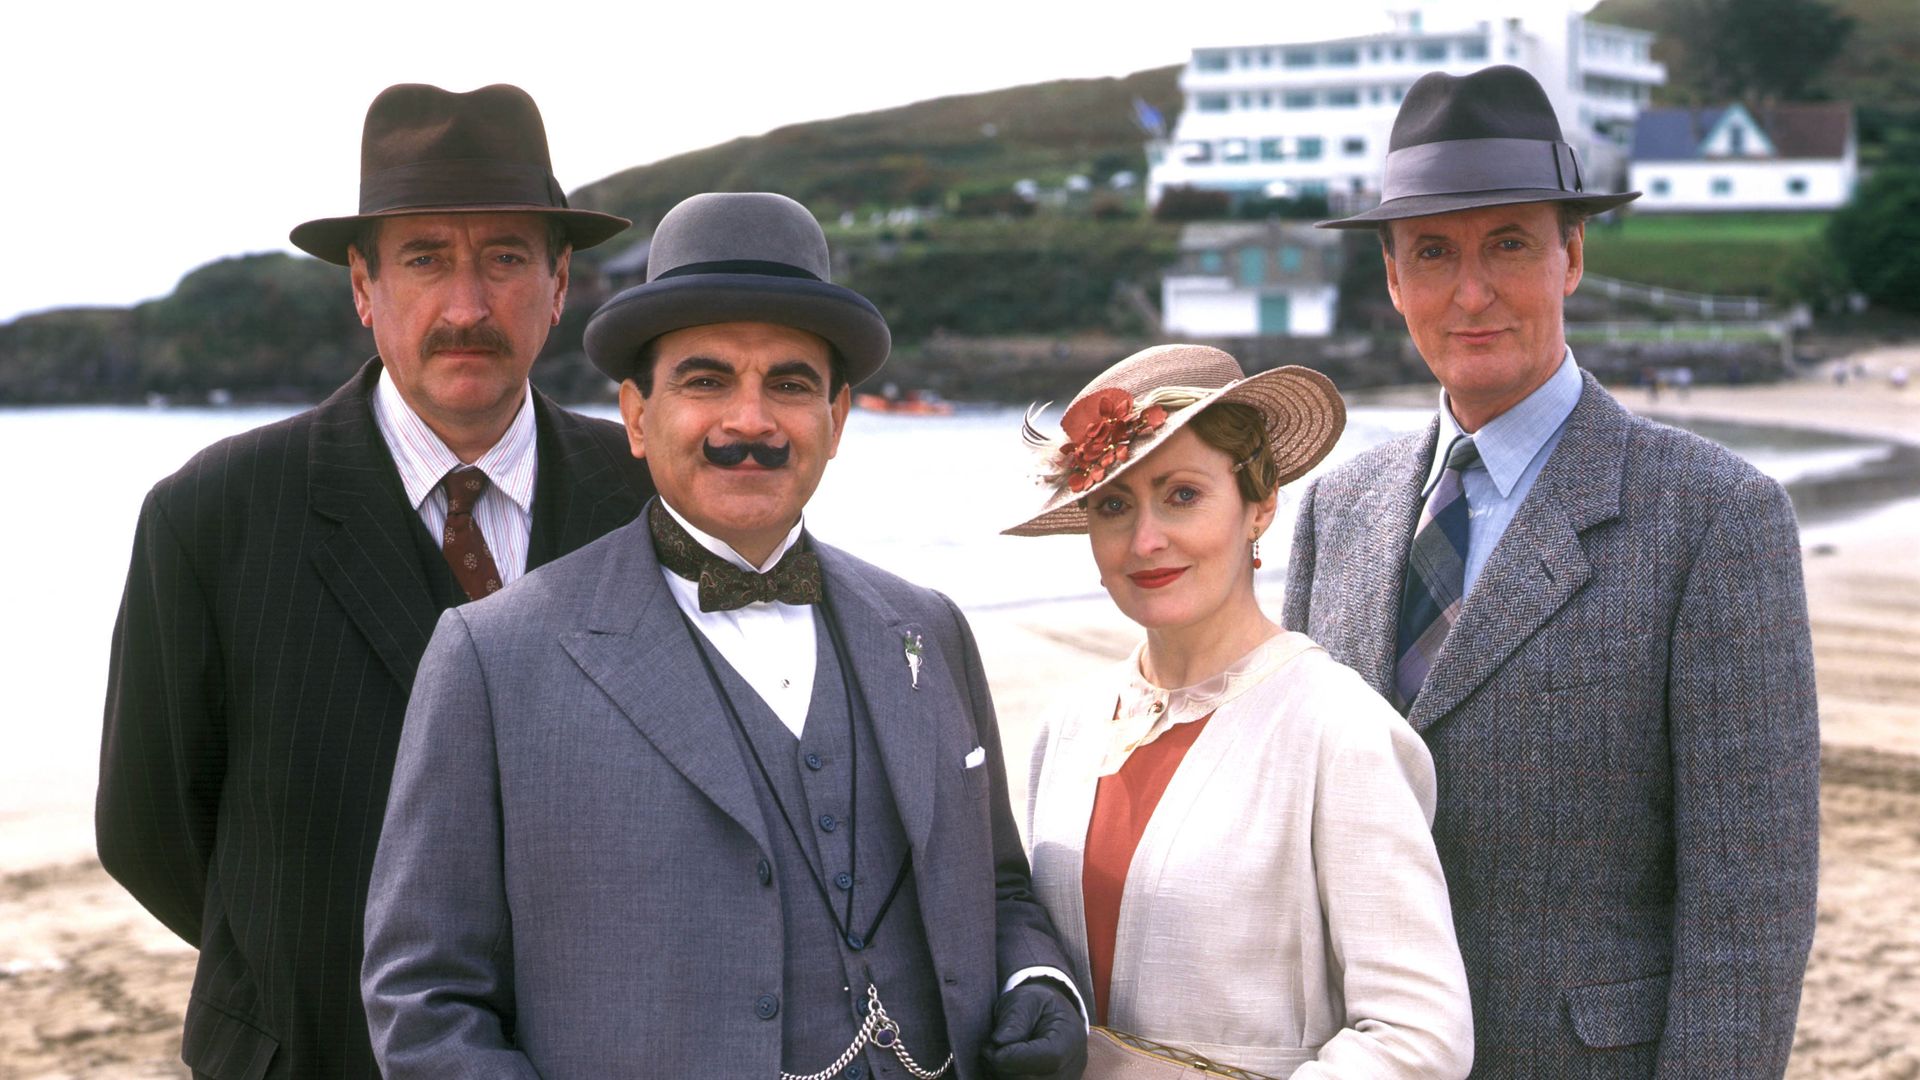 Philip Jackson as Chief Inspector Japp, David Suchet as Hercule Poirot, Pauline Moran as Miss Lemon and Hugh Fraser as Captain Hastings
'Agatha Christie - Poirot - Evil Under the Sun' TV Programme. - 2001